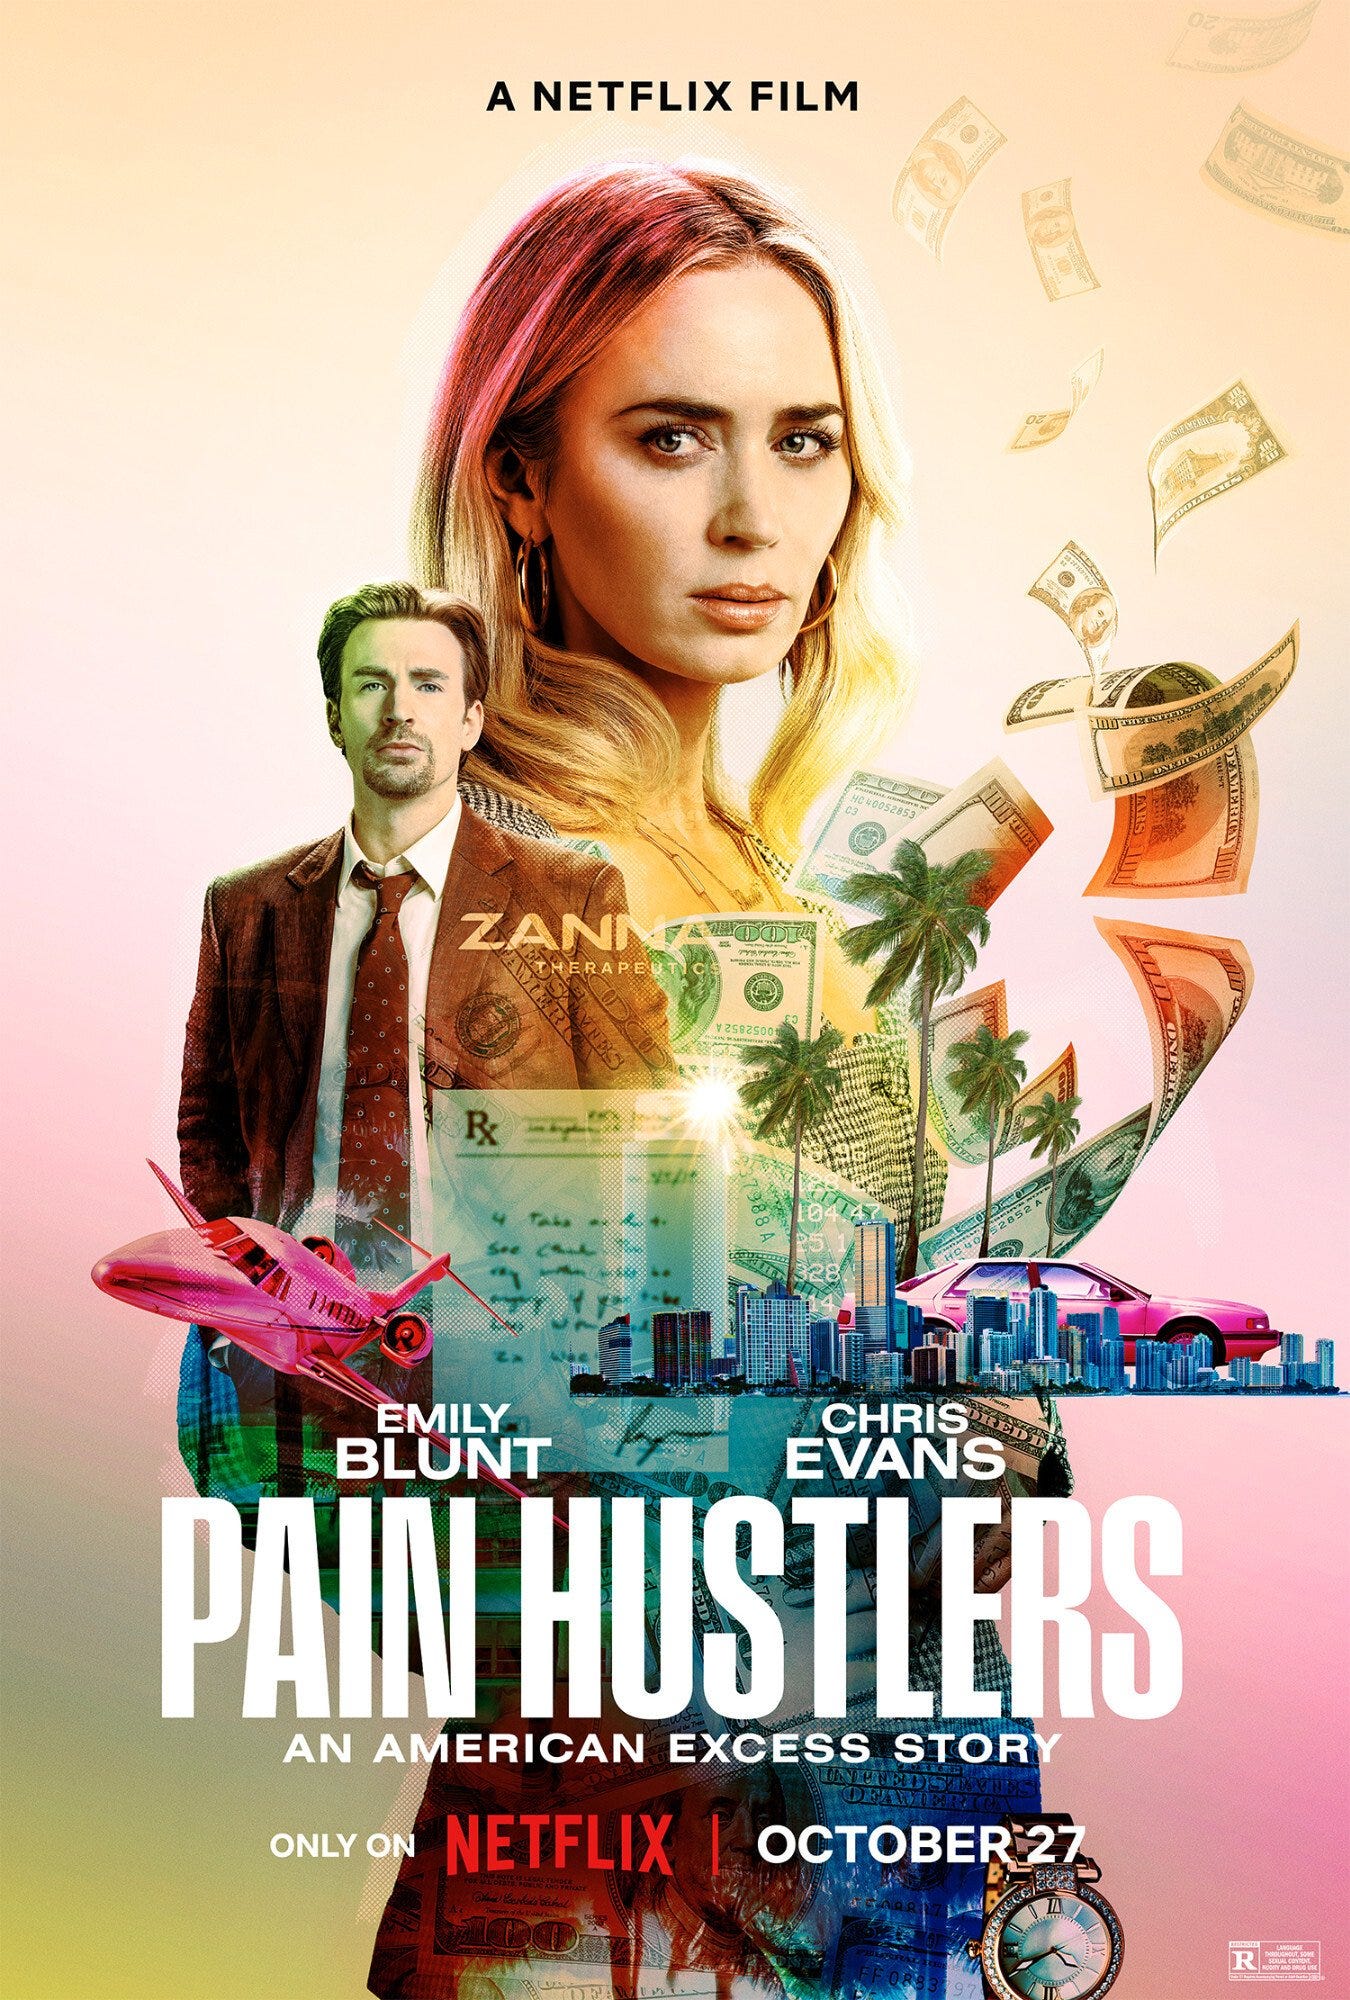 Pain Hustlers (2023) - IMDb